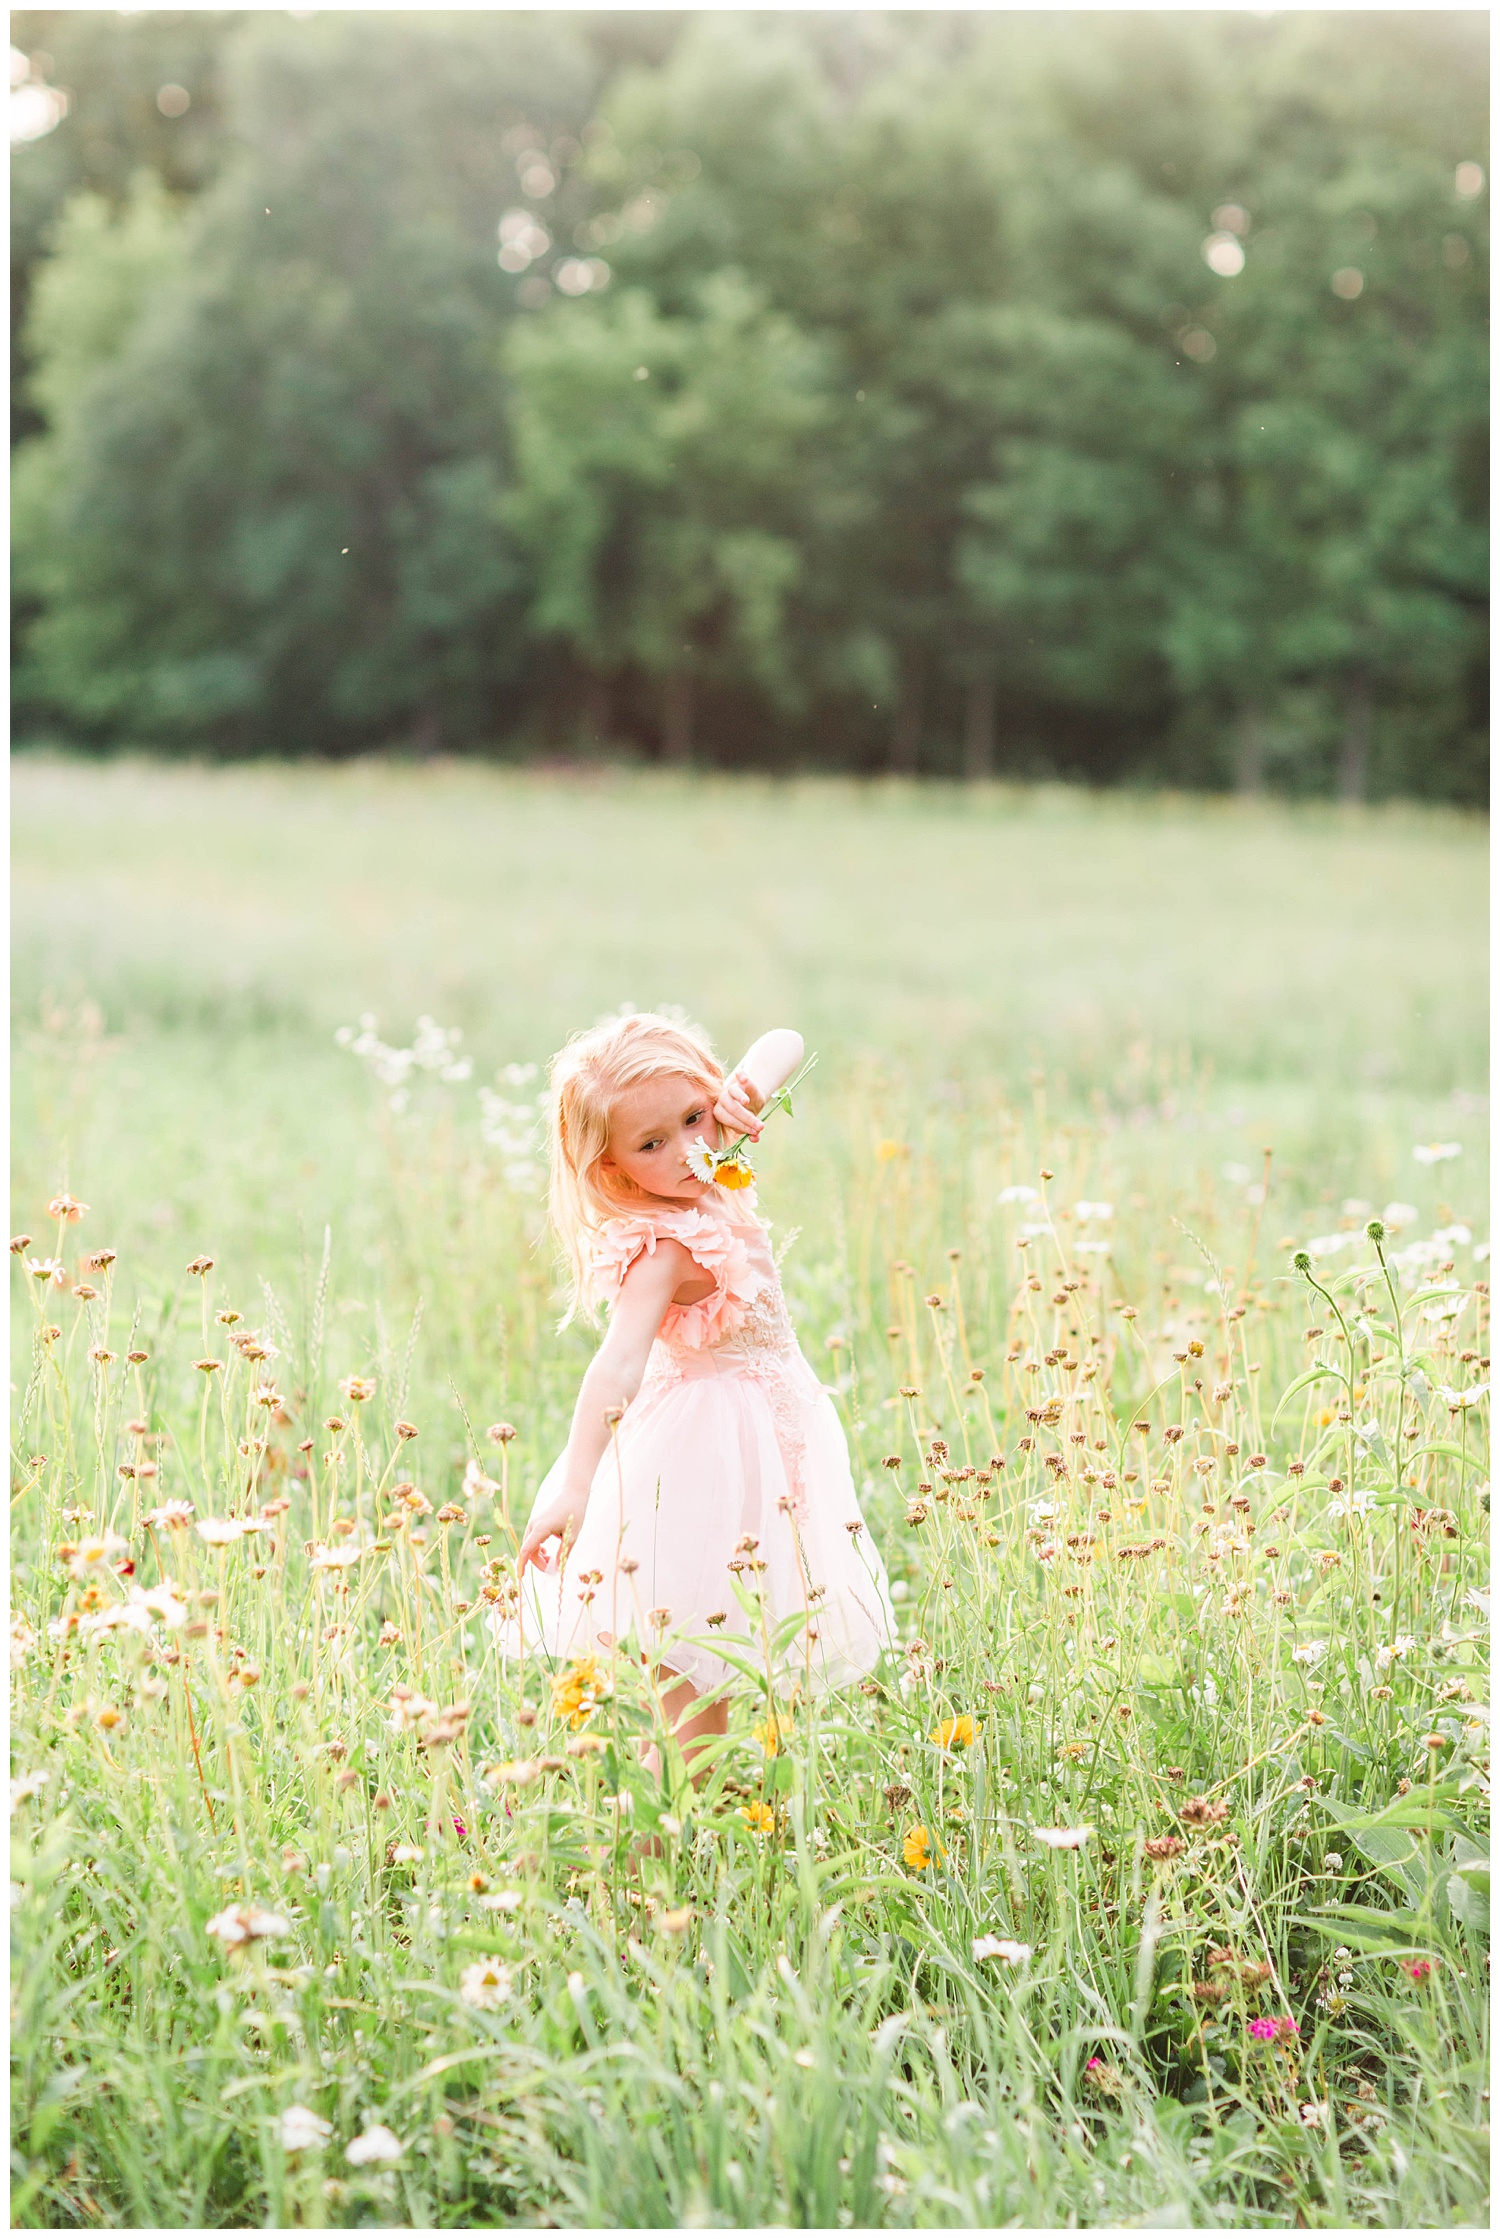 Little Liella dances in a field of wild flowers holding a bouquet wearing tutu du monde couture dress by Trish Scully | CB Studio